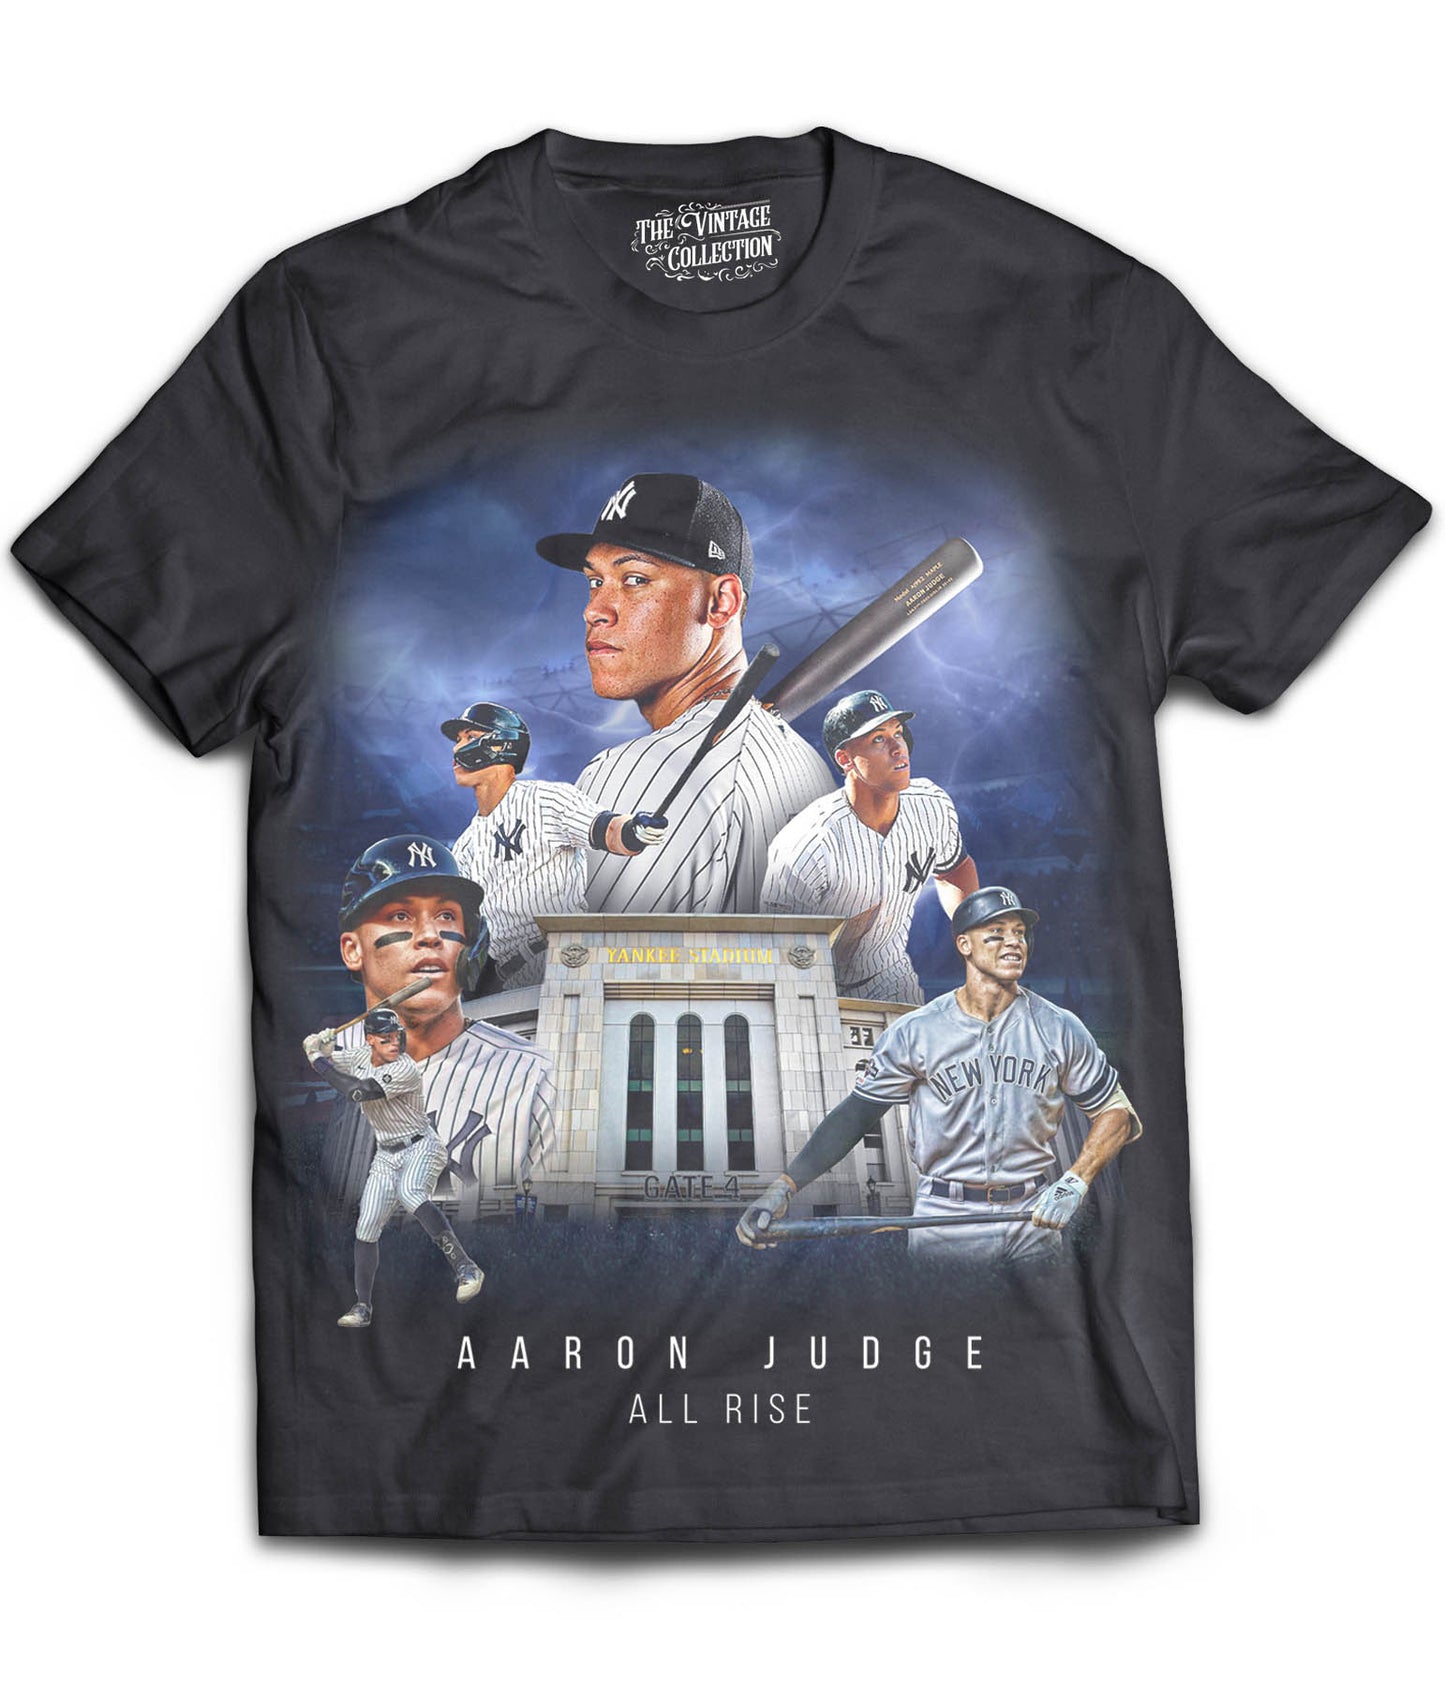 Judge Tribute T-Shirt